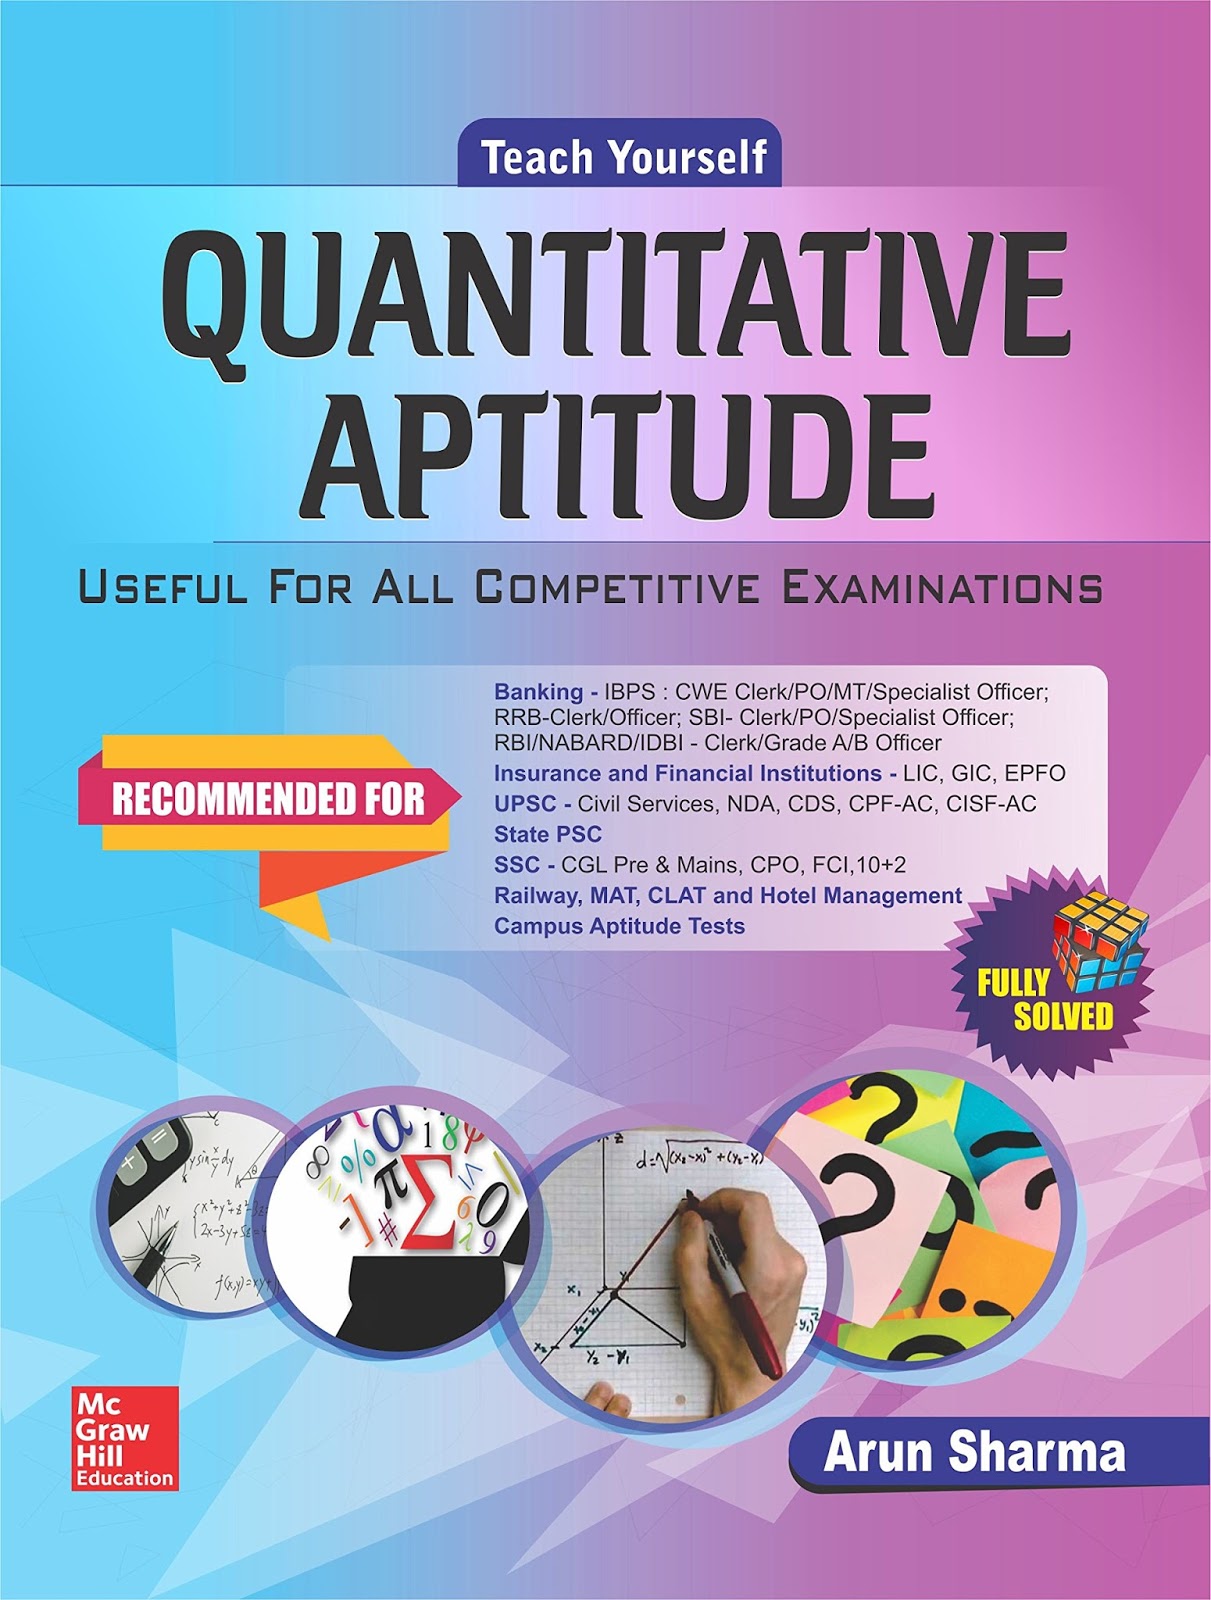 rs-agarwal-quantitative-aptitude-pdf-free-download-2015-scribd-india